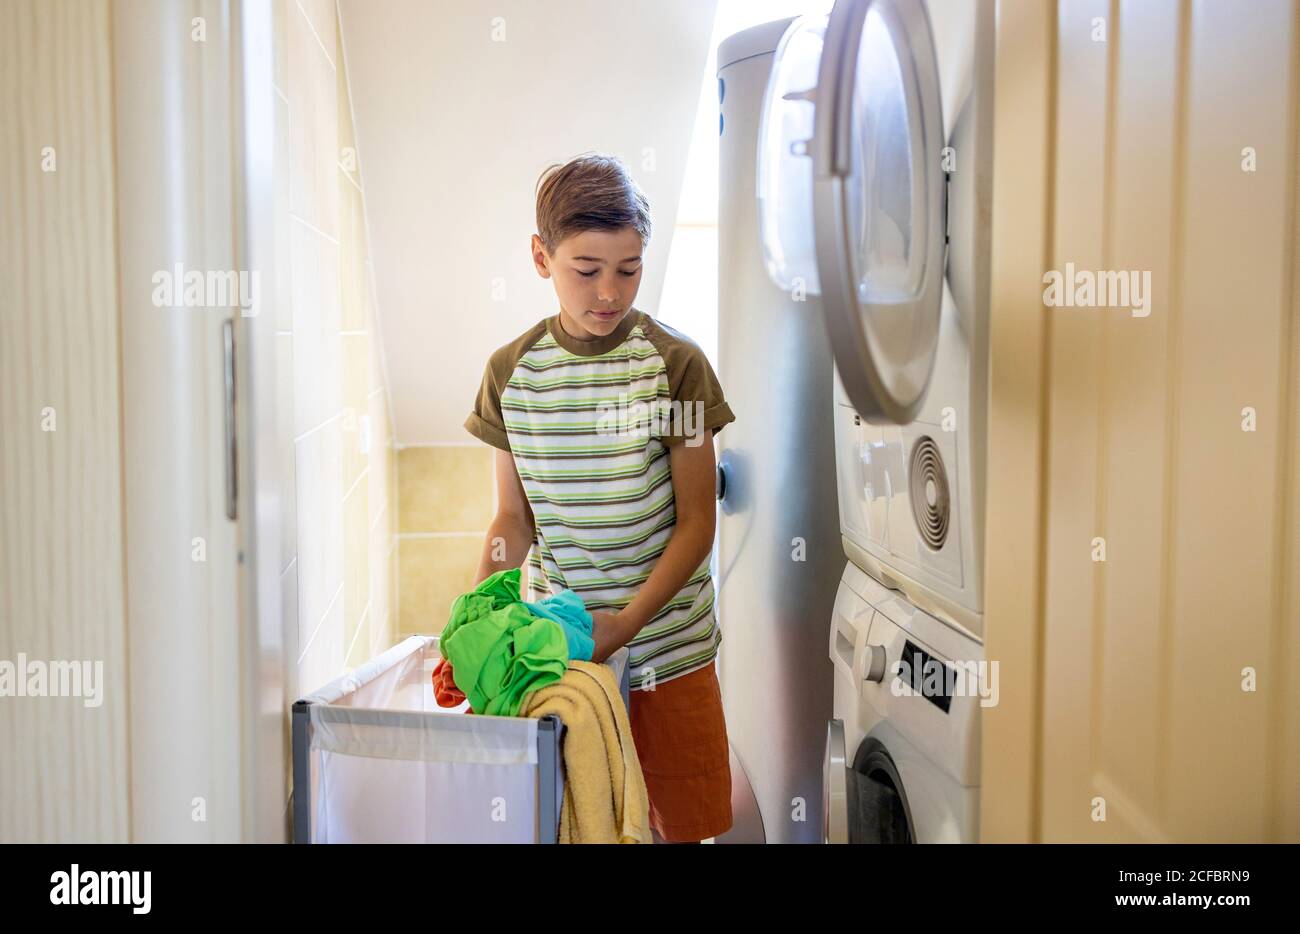 Loading washing machine at home Stock Photo